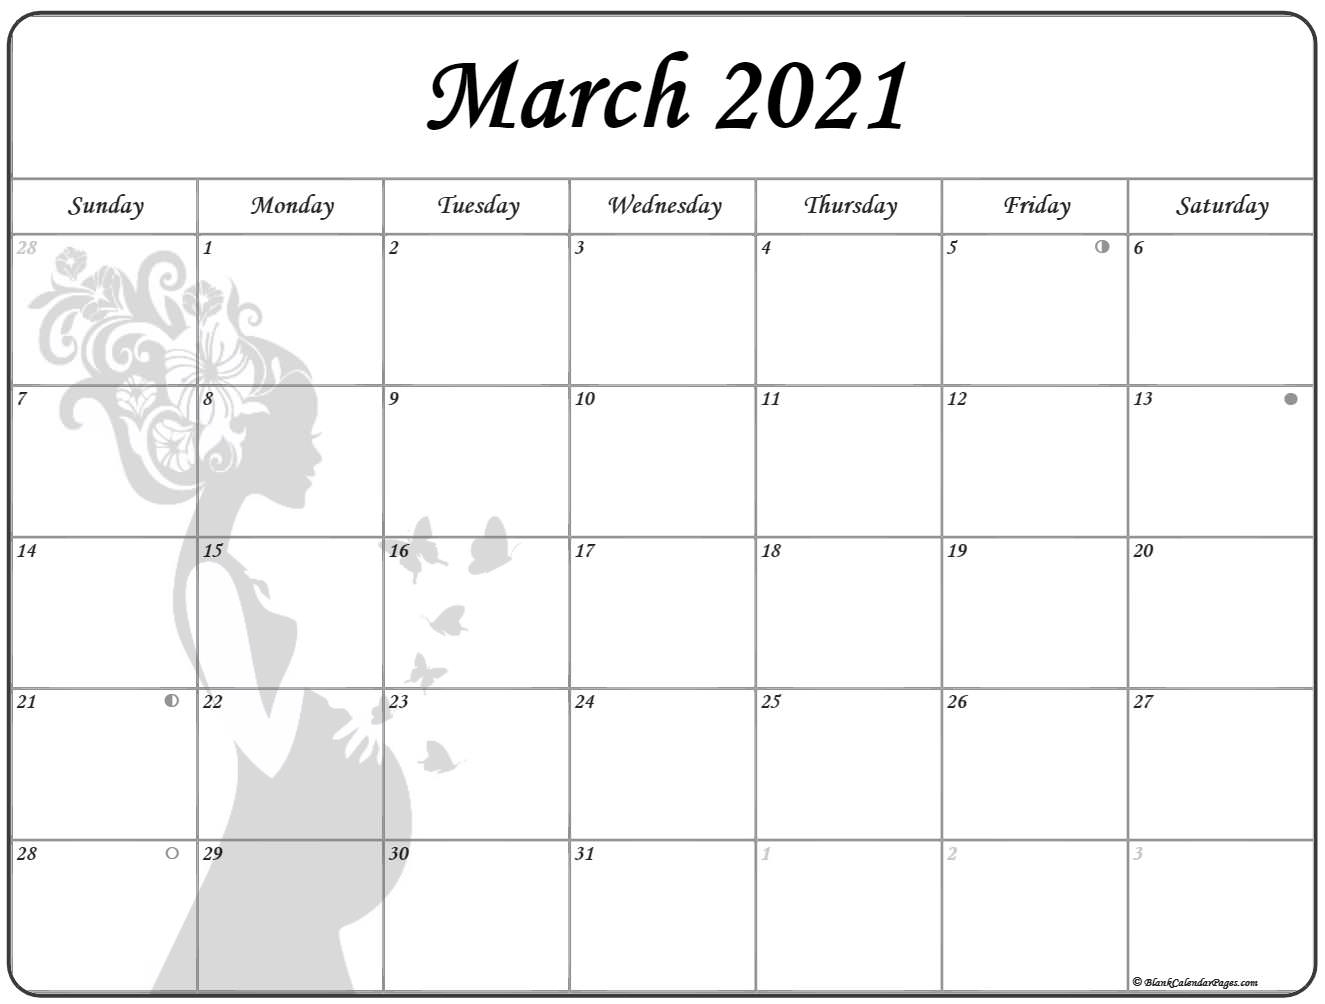 March 2021 Pregnancy Calendar Fertility Calendar